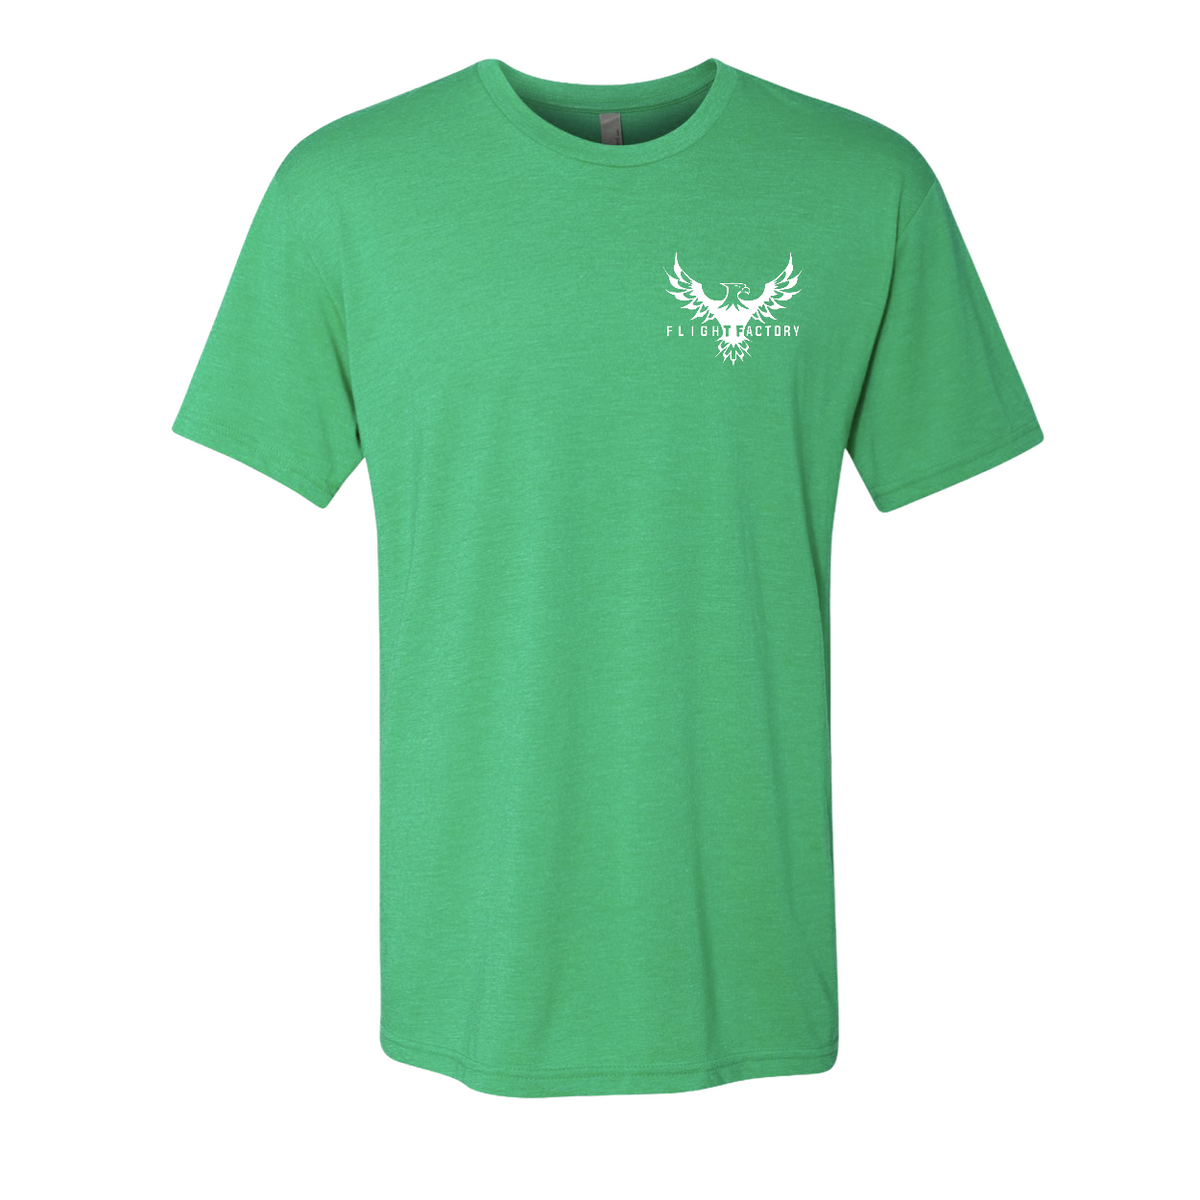 Flight Factory Tri-Blend T-Shirt w/Prodigy Logo